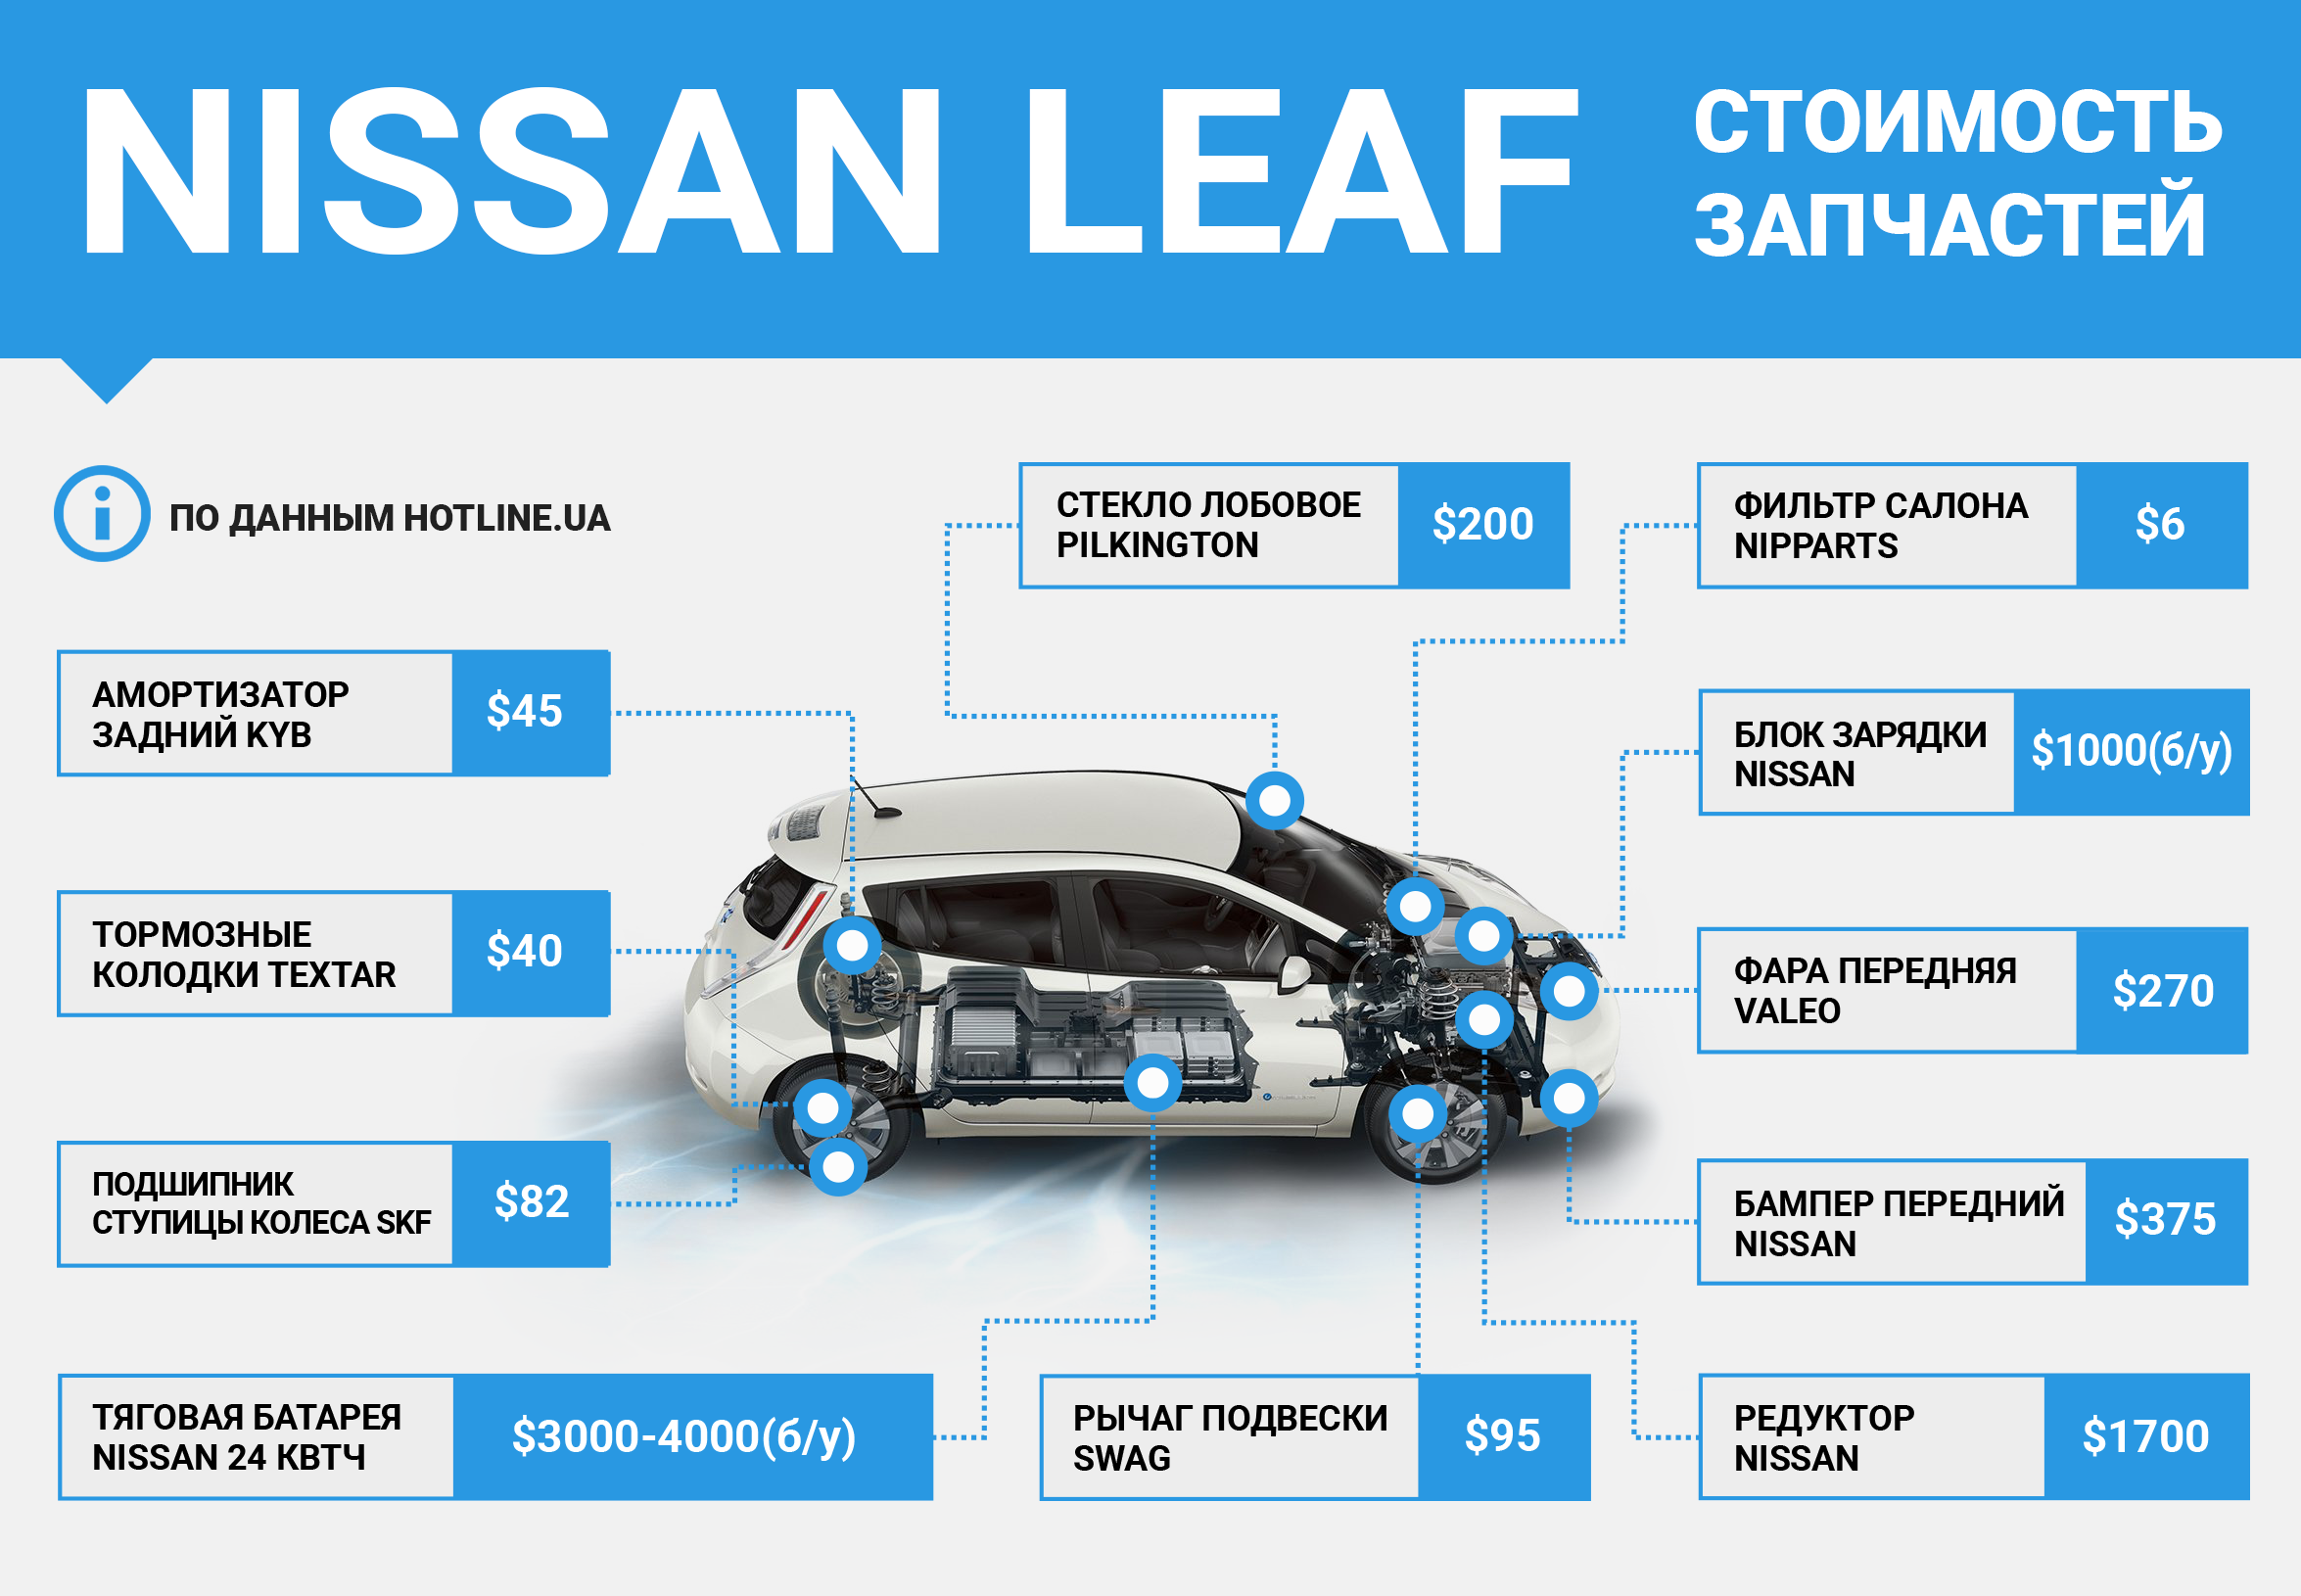 Nissan leaf — обзор — плюсы и минусы